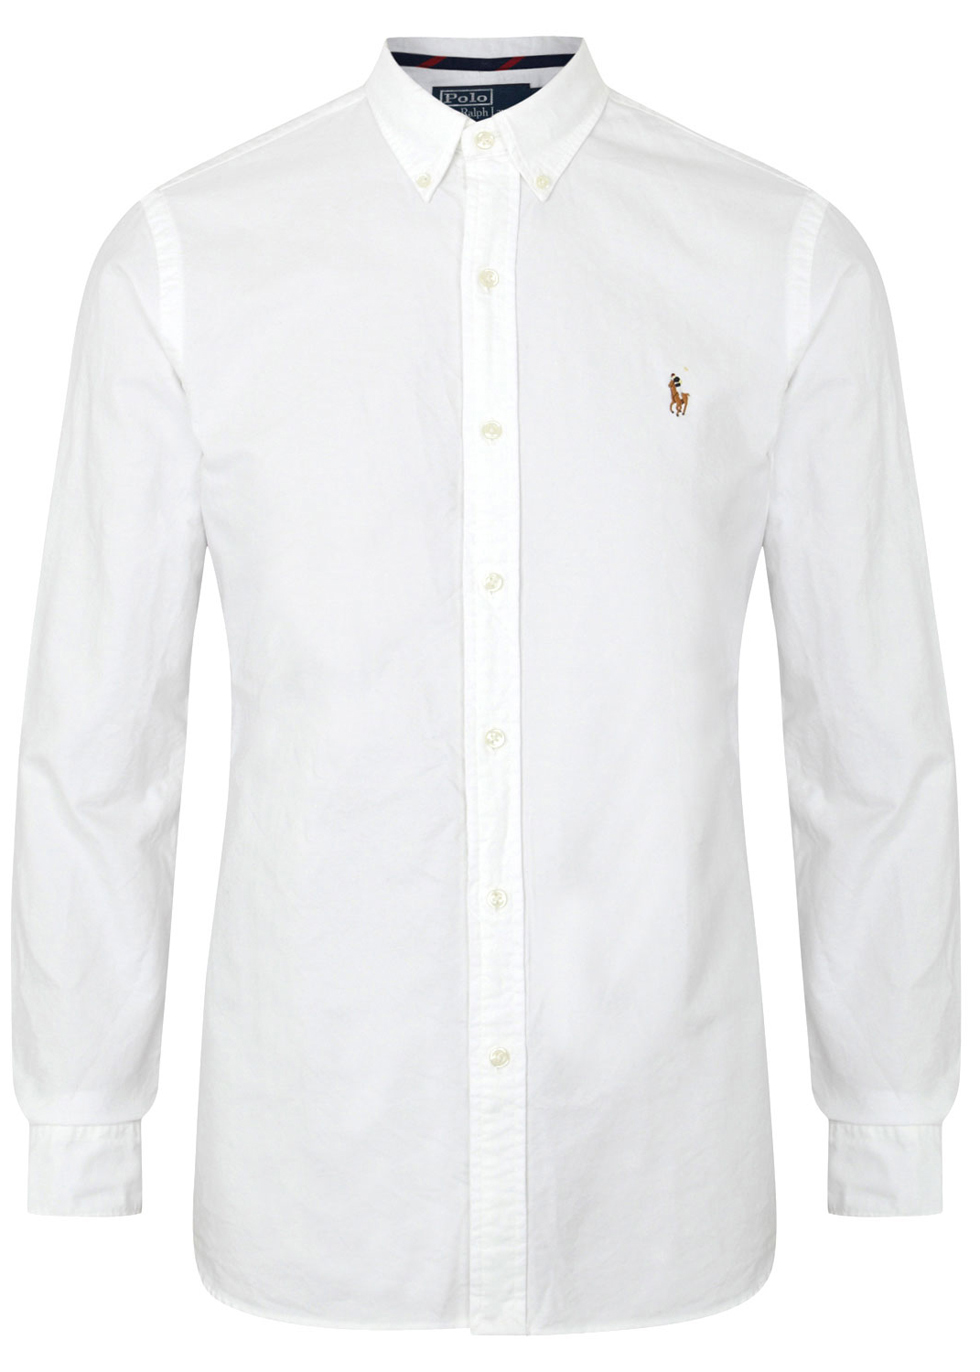 mens white ralph lauren oxford shirt